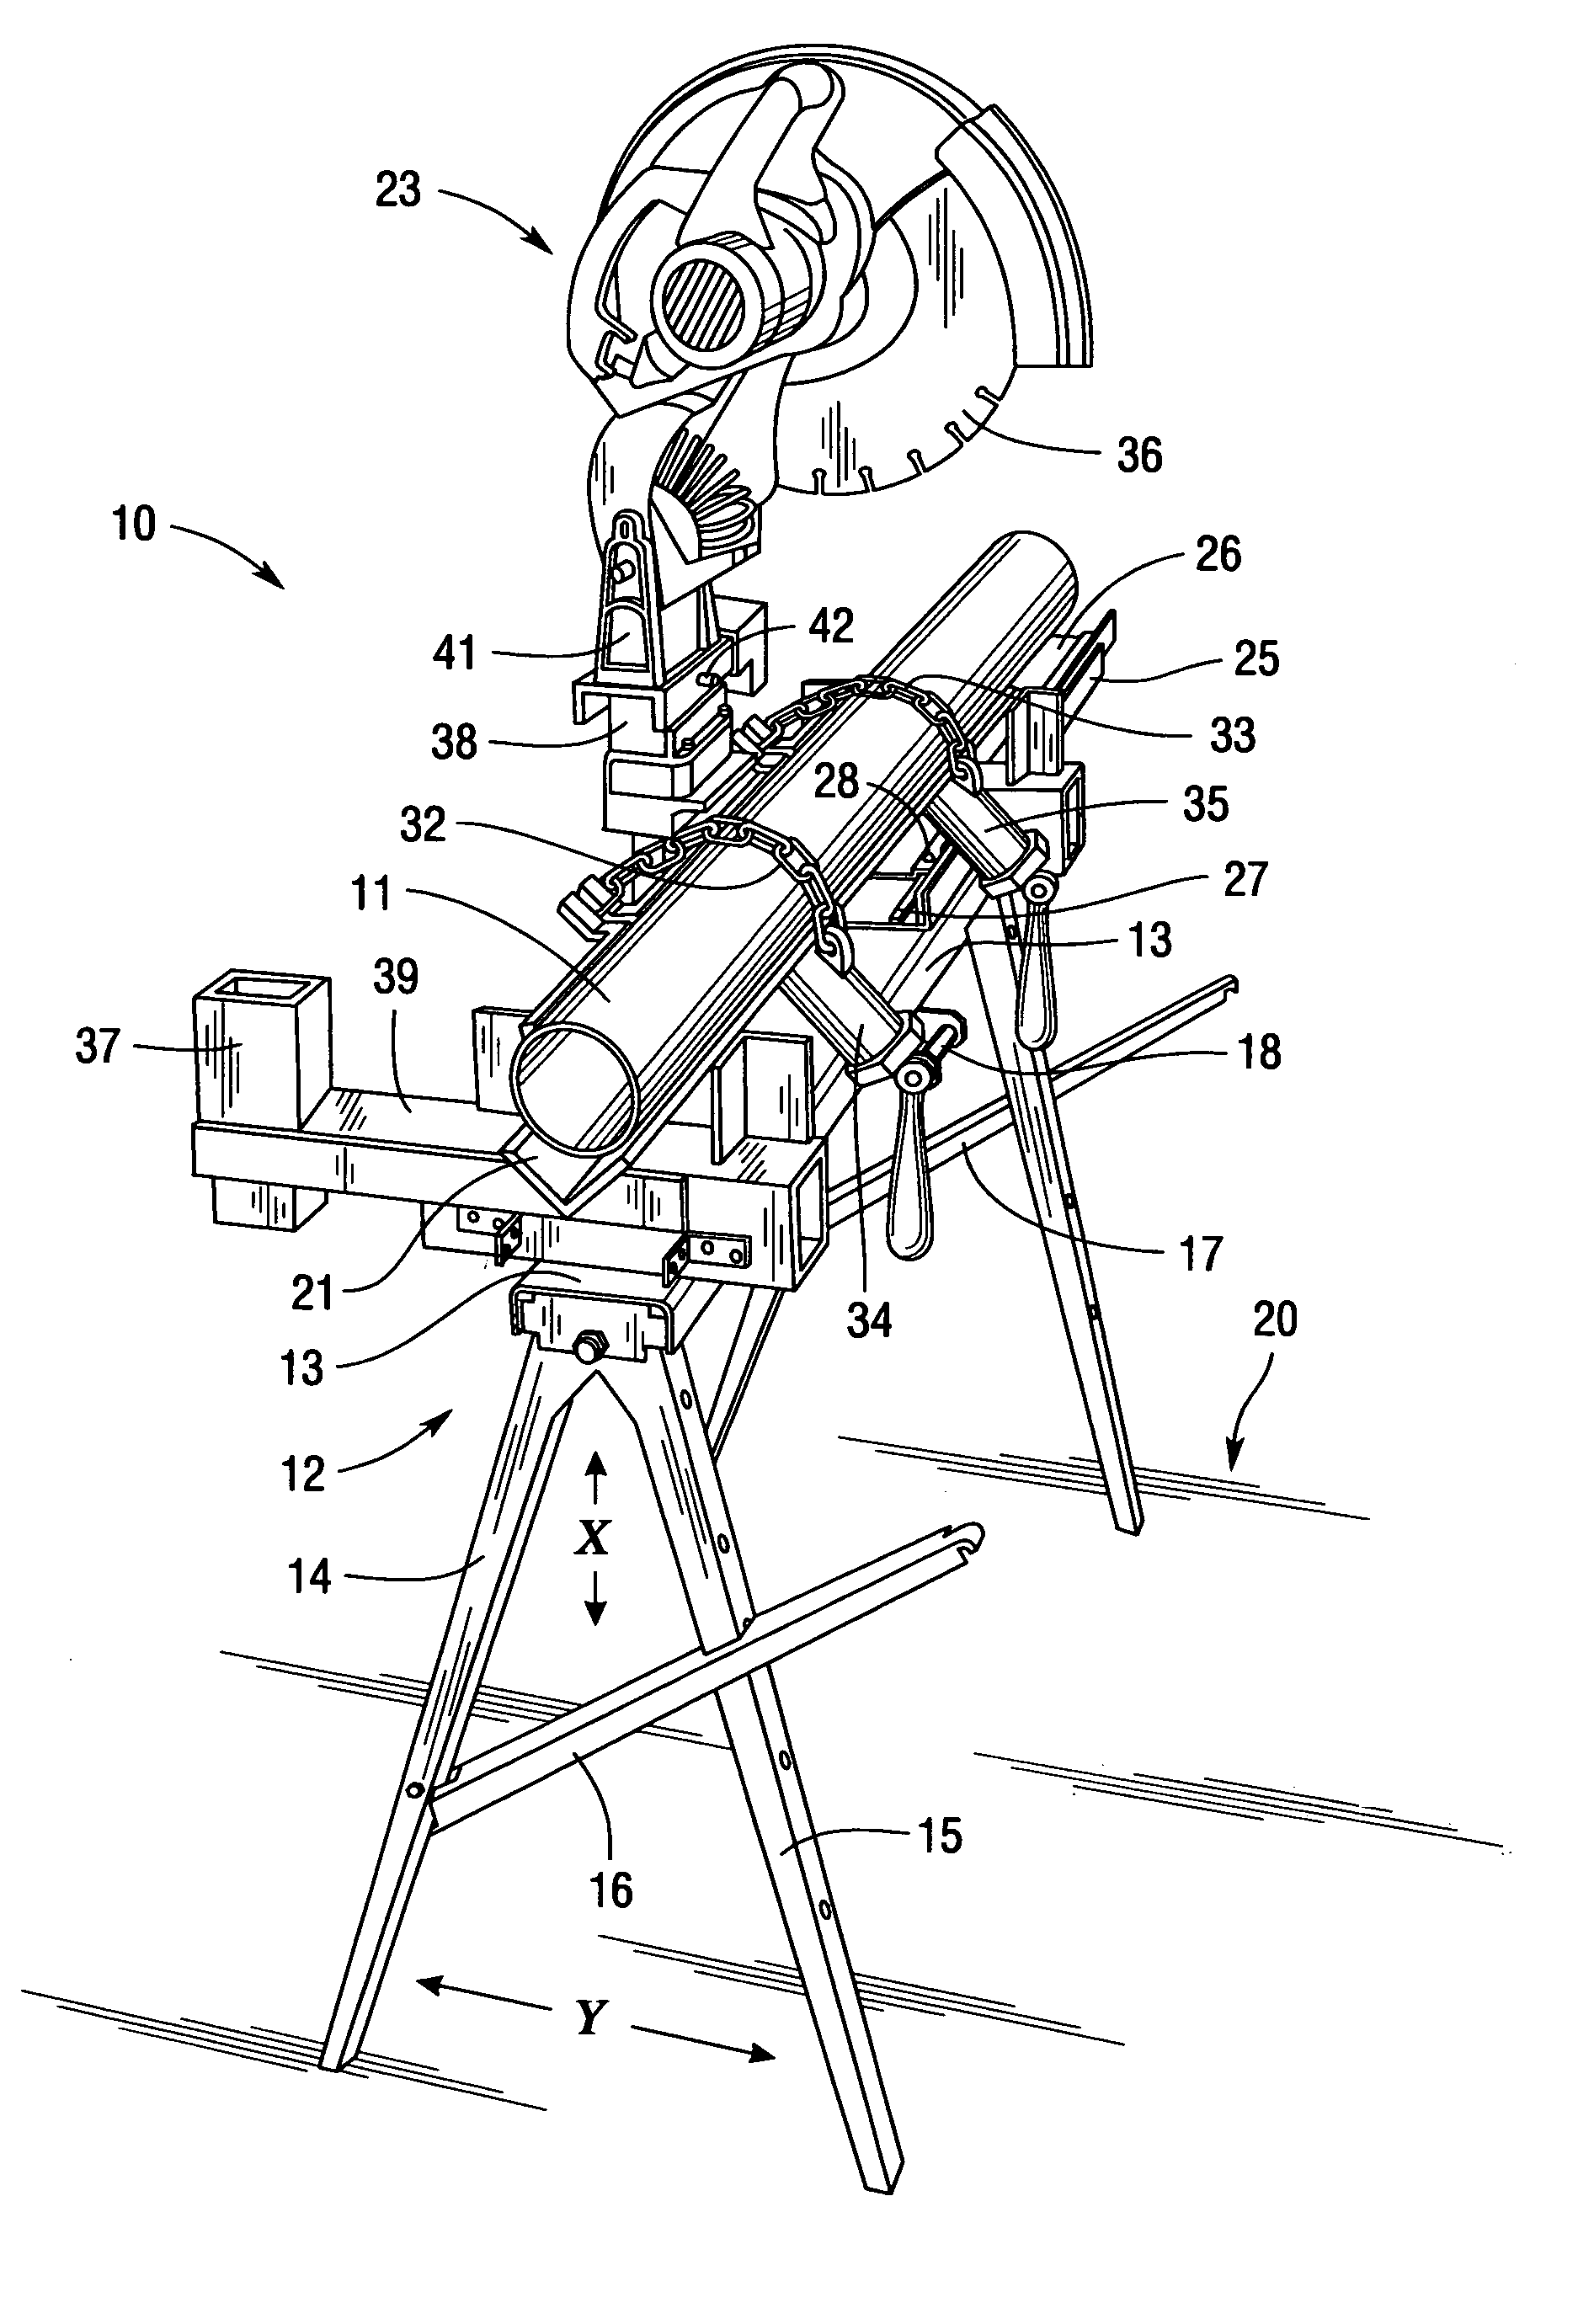 Portable pipe cutting apparatus